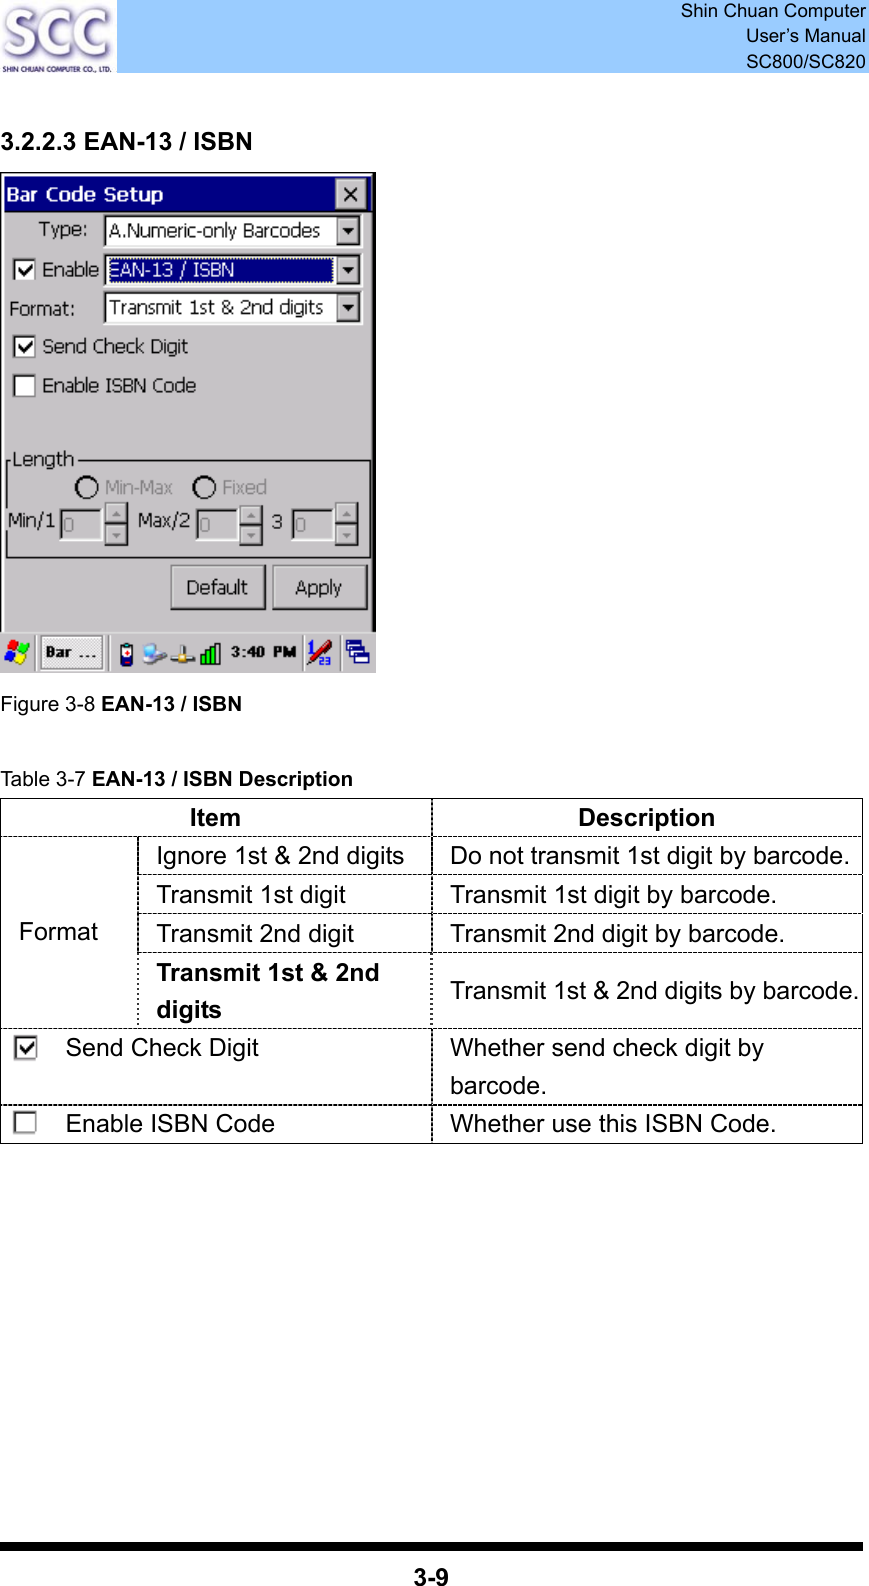  Shin Chuan Computer User’s Manual SC800/SC820  3-9  3.2.2.3 EAN-13 / ISBN  Figure 3-8 EAN-13 / ISBN  Table 3-7 EAN-13 / ISBN Description Item Description Ignore 1st &amp; 2nd digits  Do not transmit 1st digit by barcode.Transmit 1st digit  Transmit 1st digit by barcode. Transmit 2nd digit  Transmit 2nd digit by barcode. Format Transmit 1st &amp; 2nd digits  Transmit 1st &amp; 2nd digits by barcode.Send Check Digit  Whether send check digit by barcode. Enable ISBN Code  Whether use this ISBN Code.          